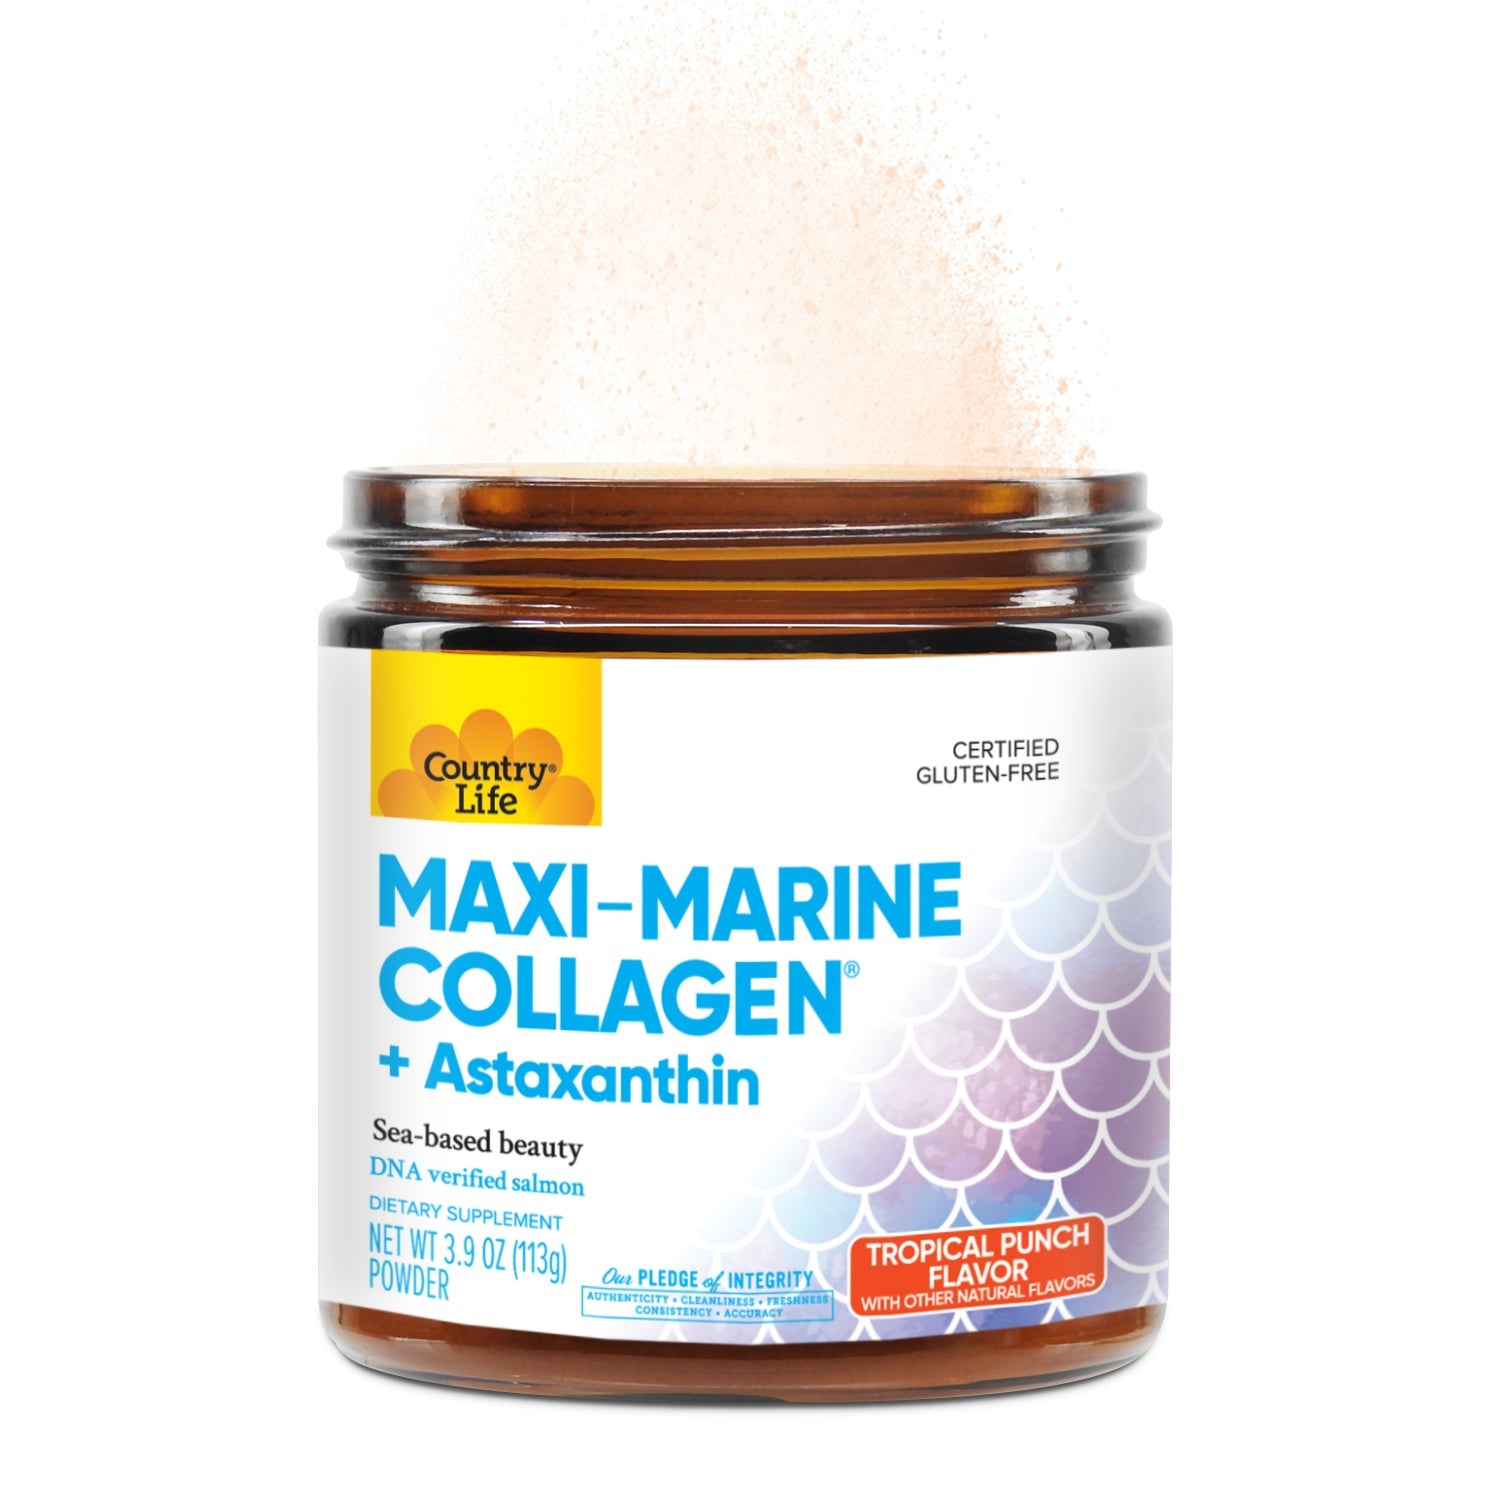 Country Life Maxi-Marine Collagen + Astaxanthin 113g